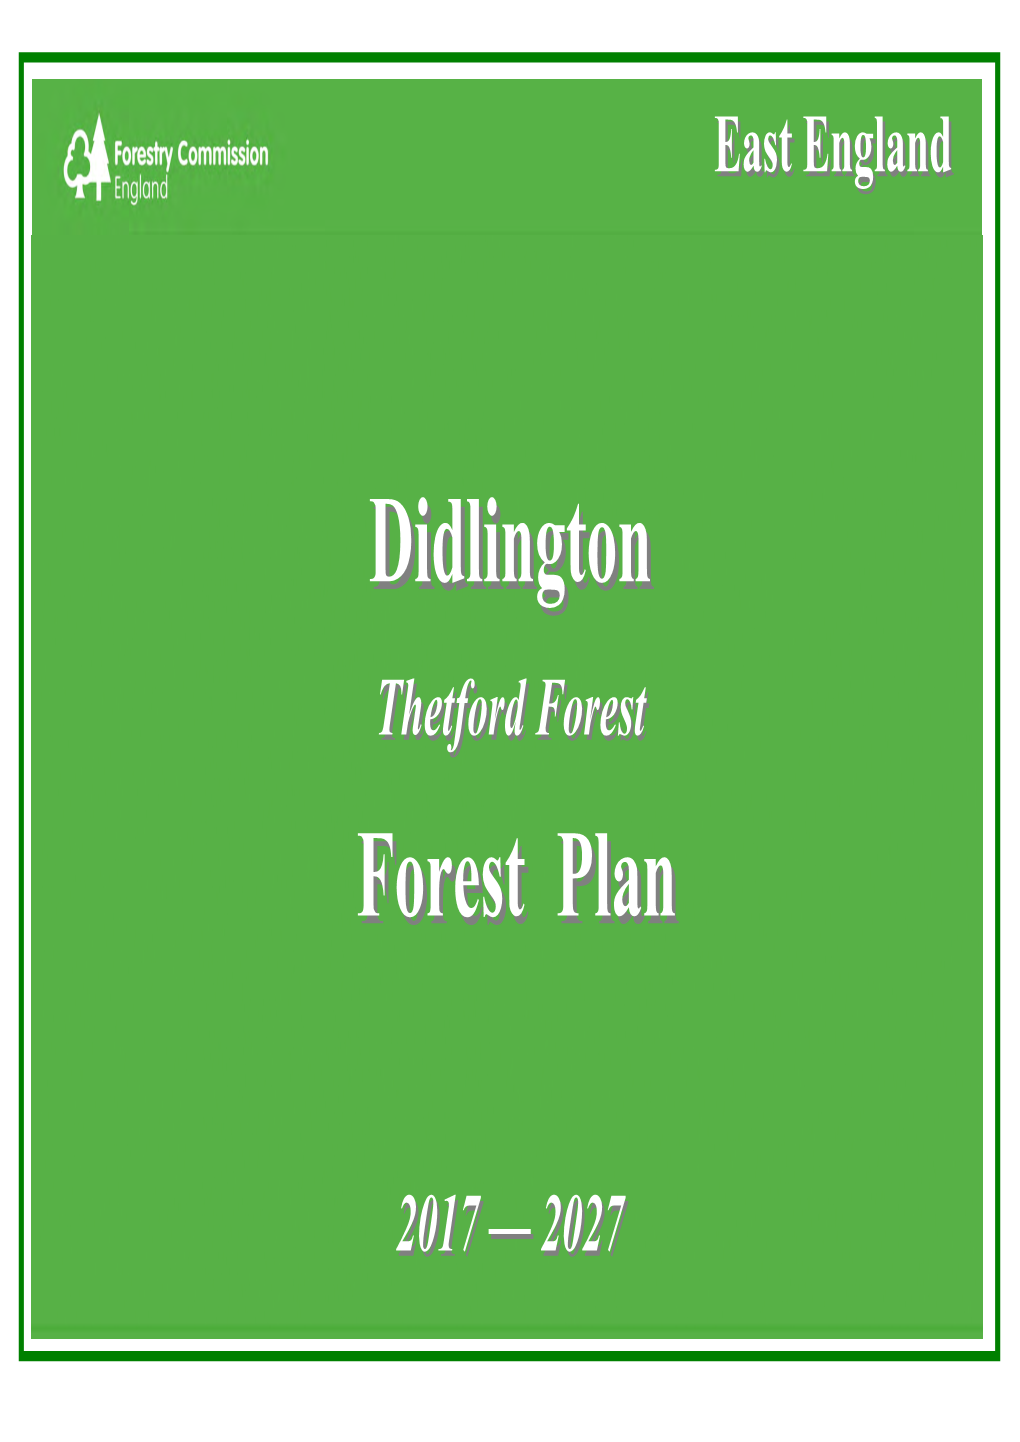 Didlington Forest Plan 2017-2027